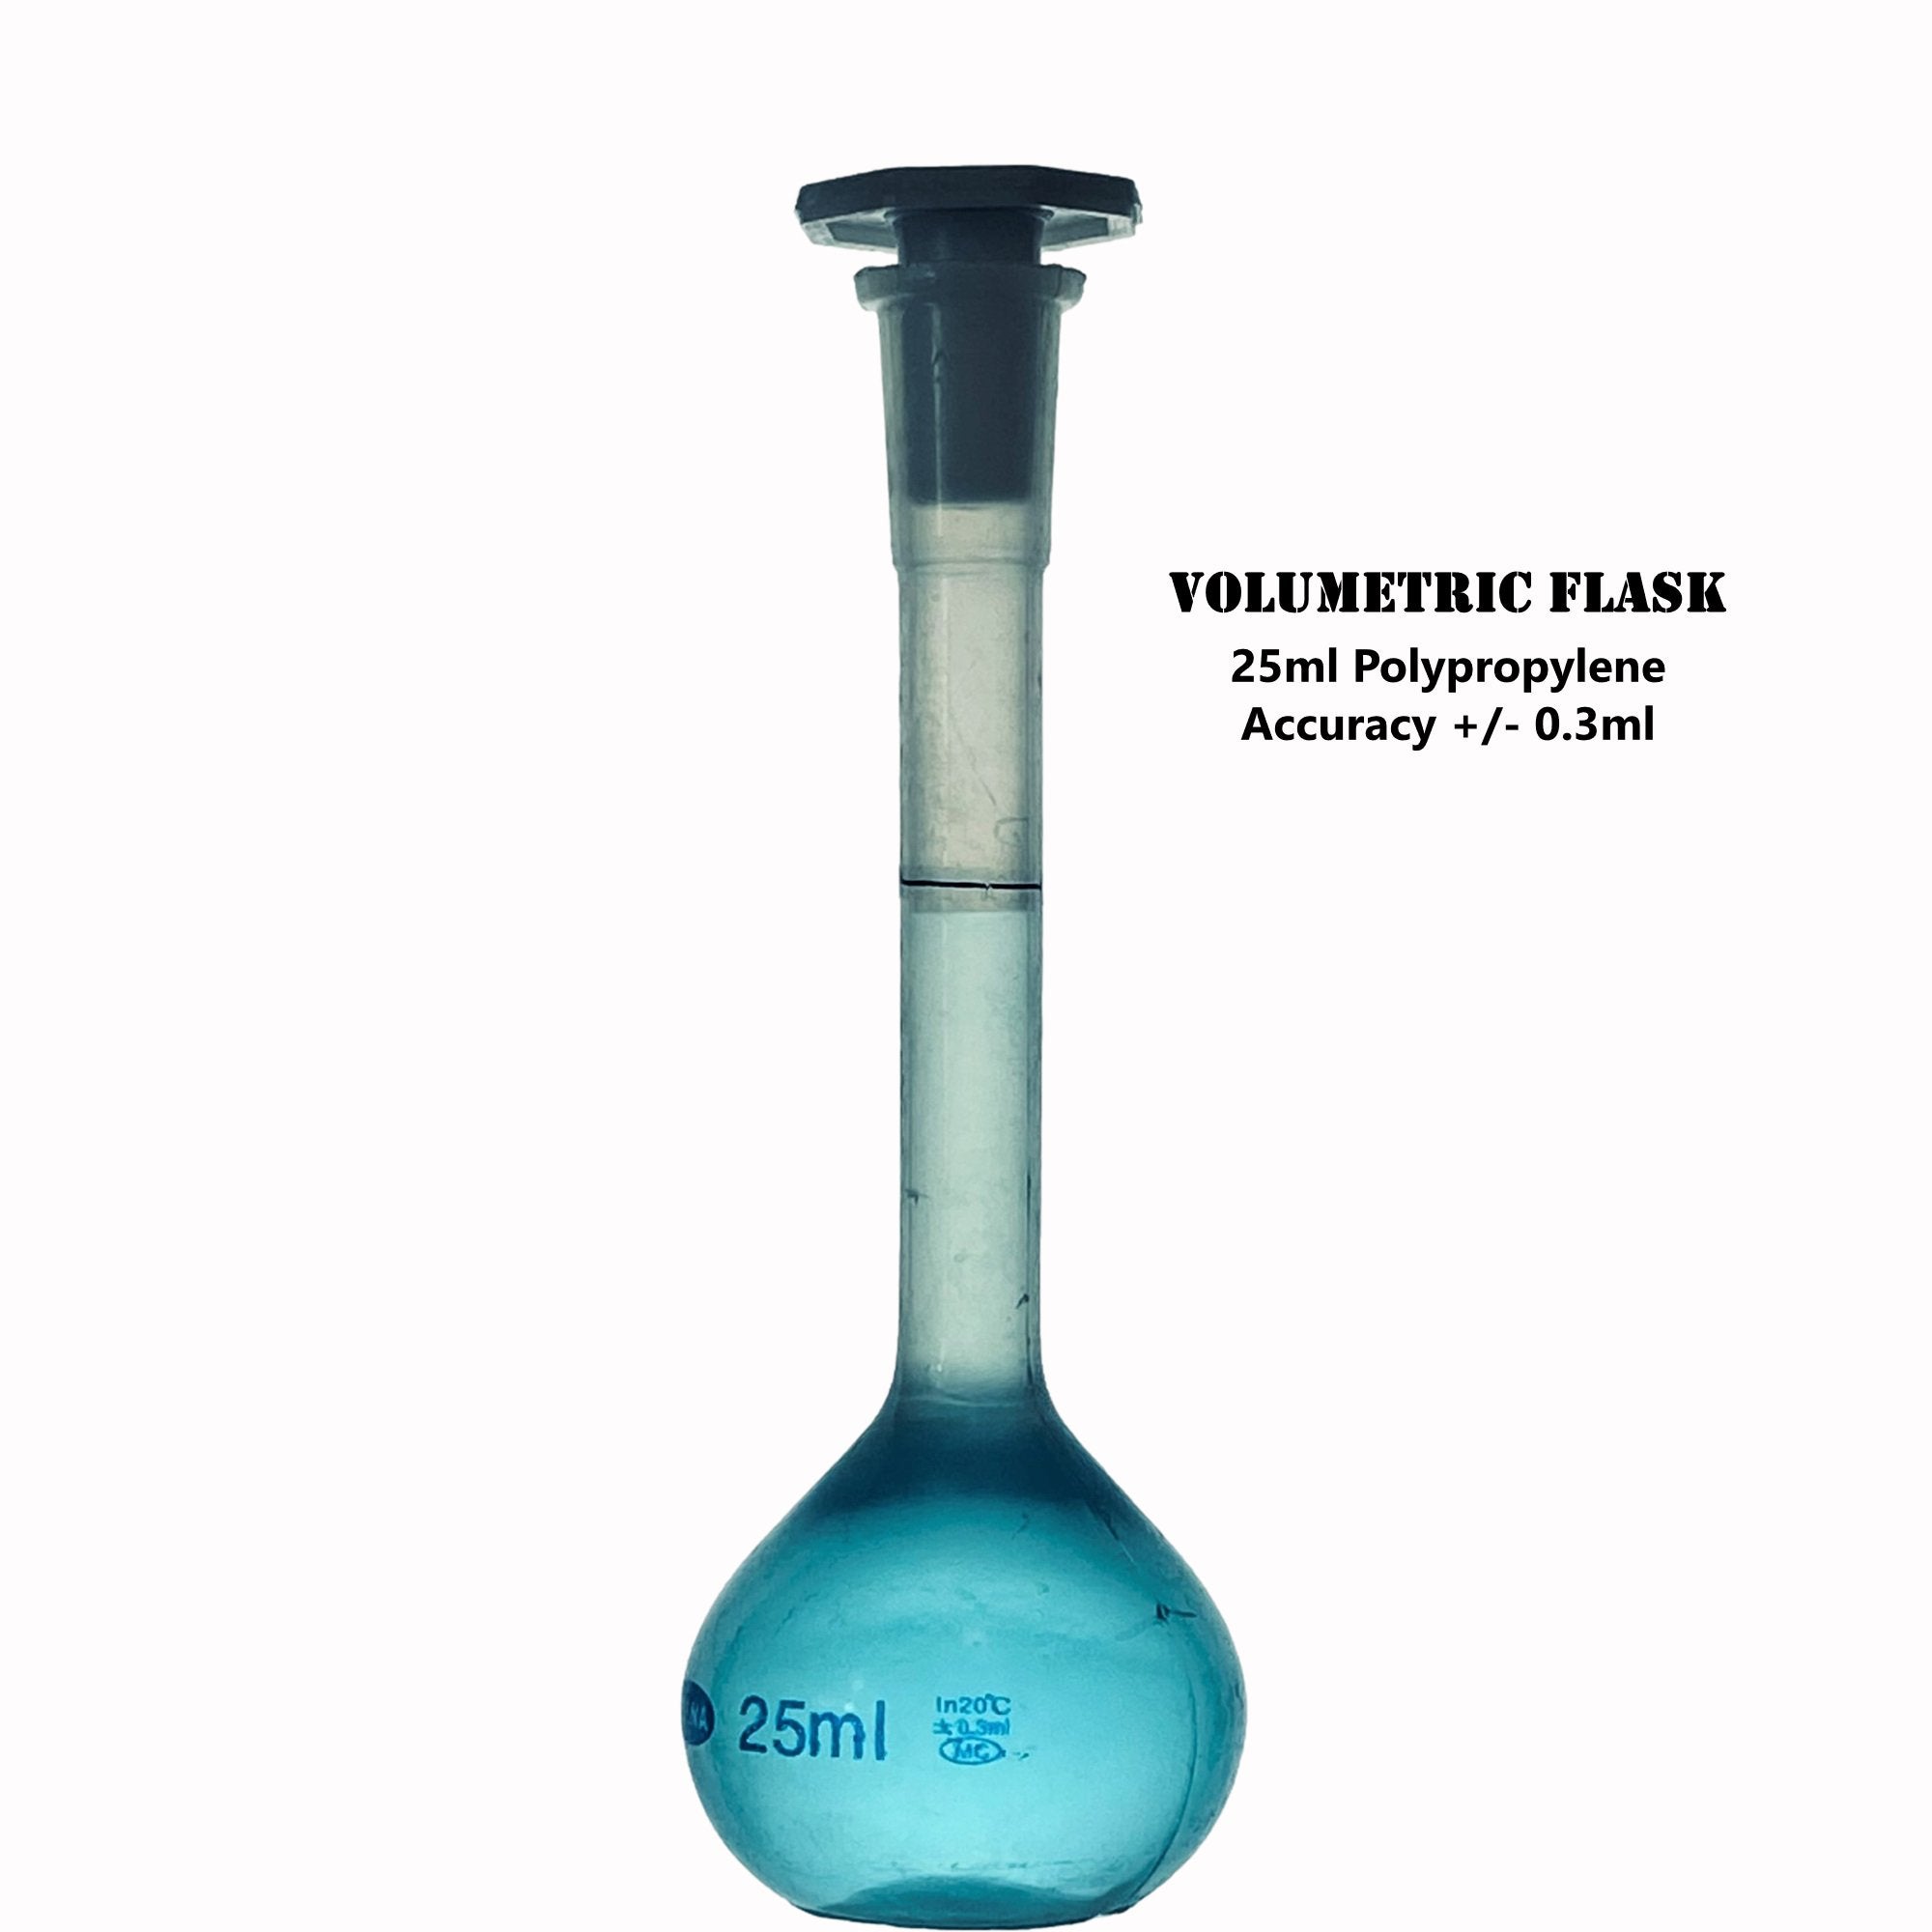 Volumetric Flask 25ml Polypropylene